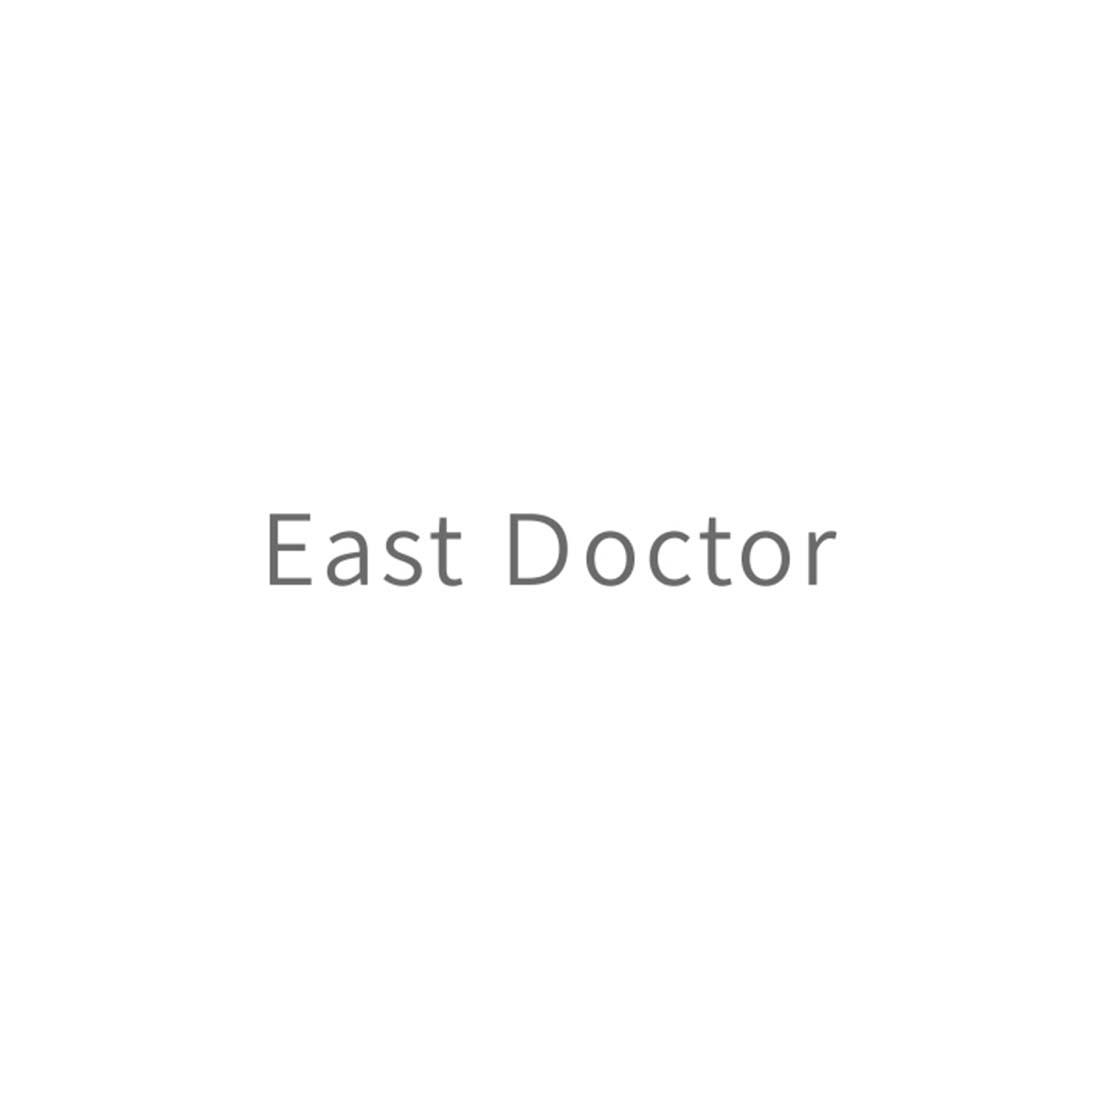 EAST DOCTOR